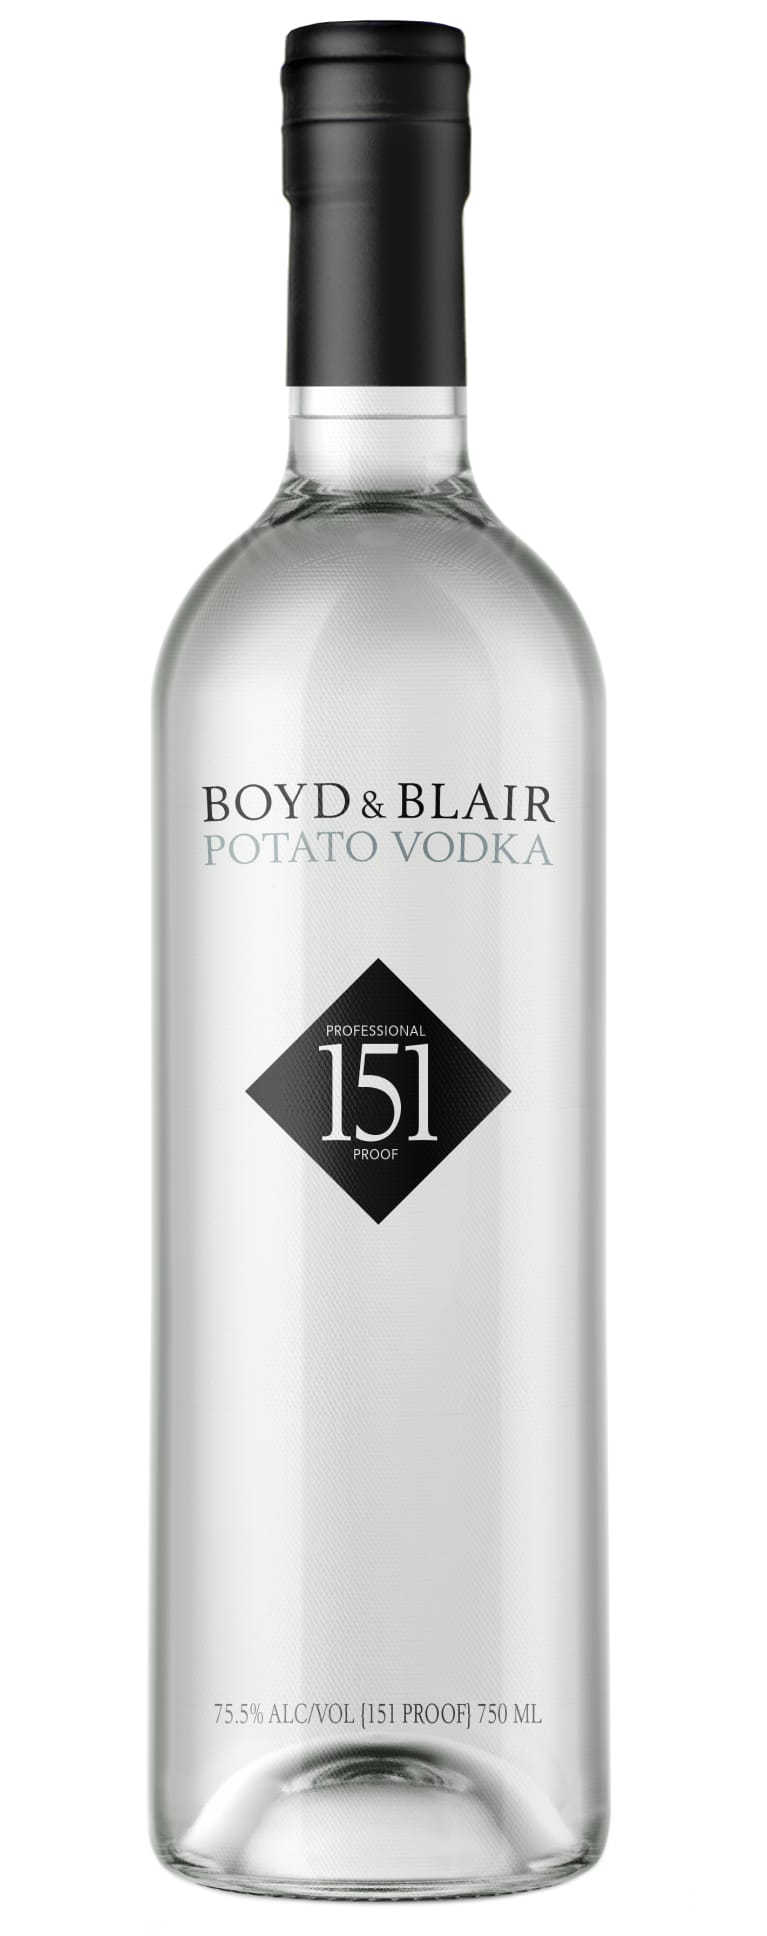 Boyd & Blair Professional Proof 151 Potato Vodka 750ML